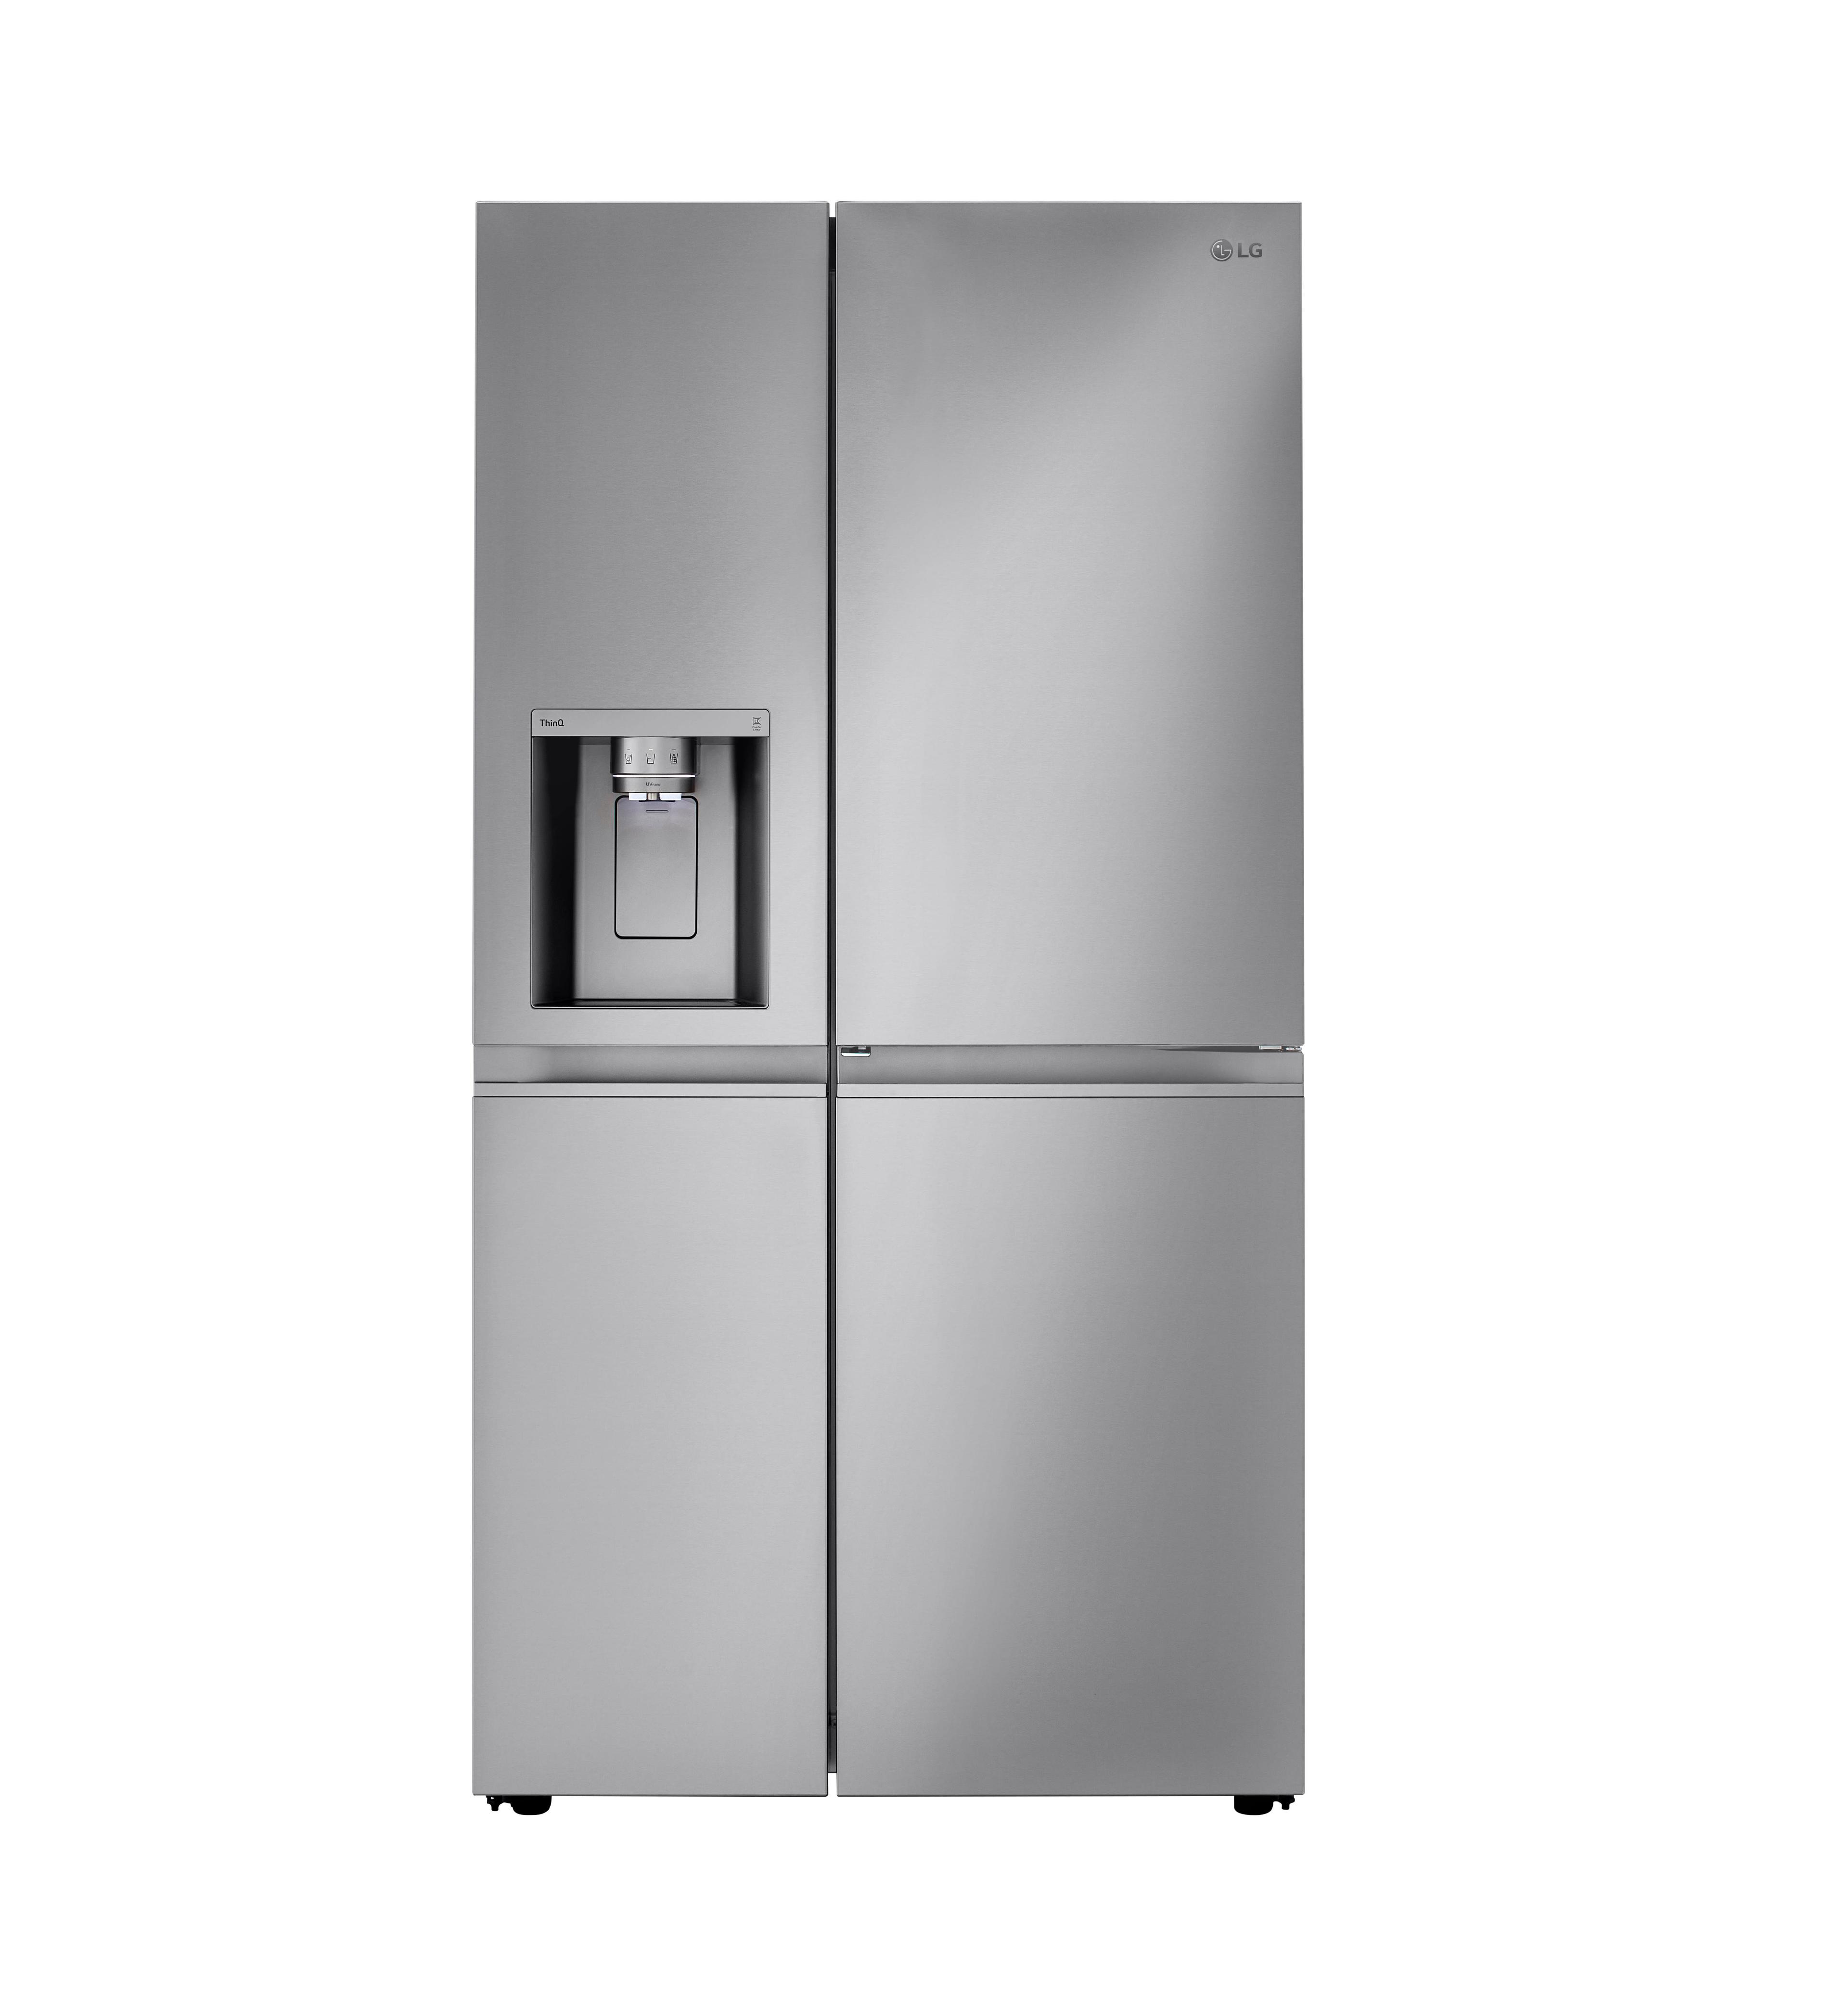 LG LRSDS2706S 27 cu.ft. Side by Side Refrigerator in Fingerprint Resistant Stainless Steel